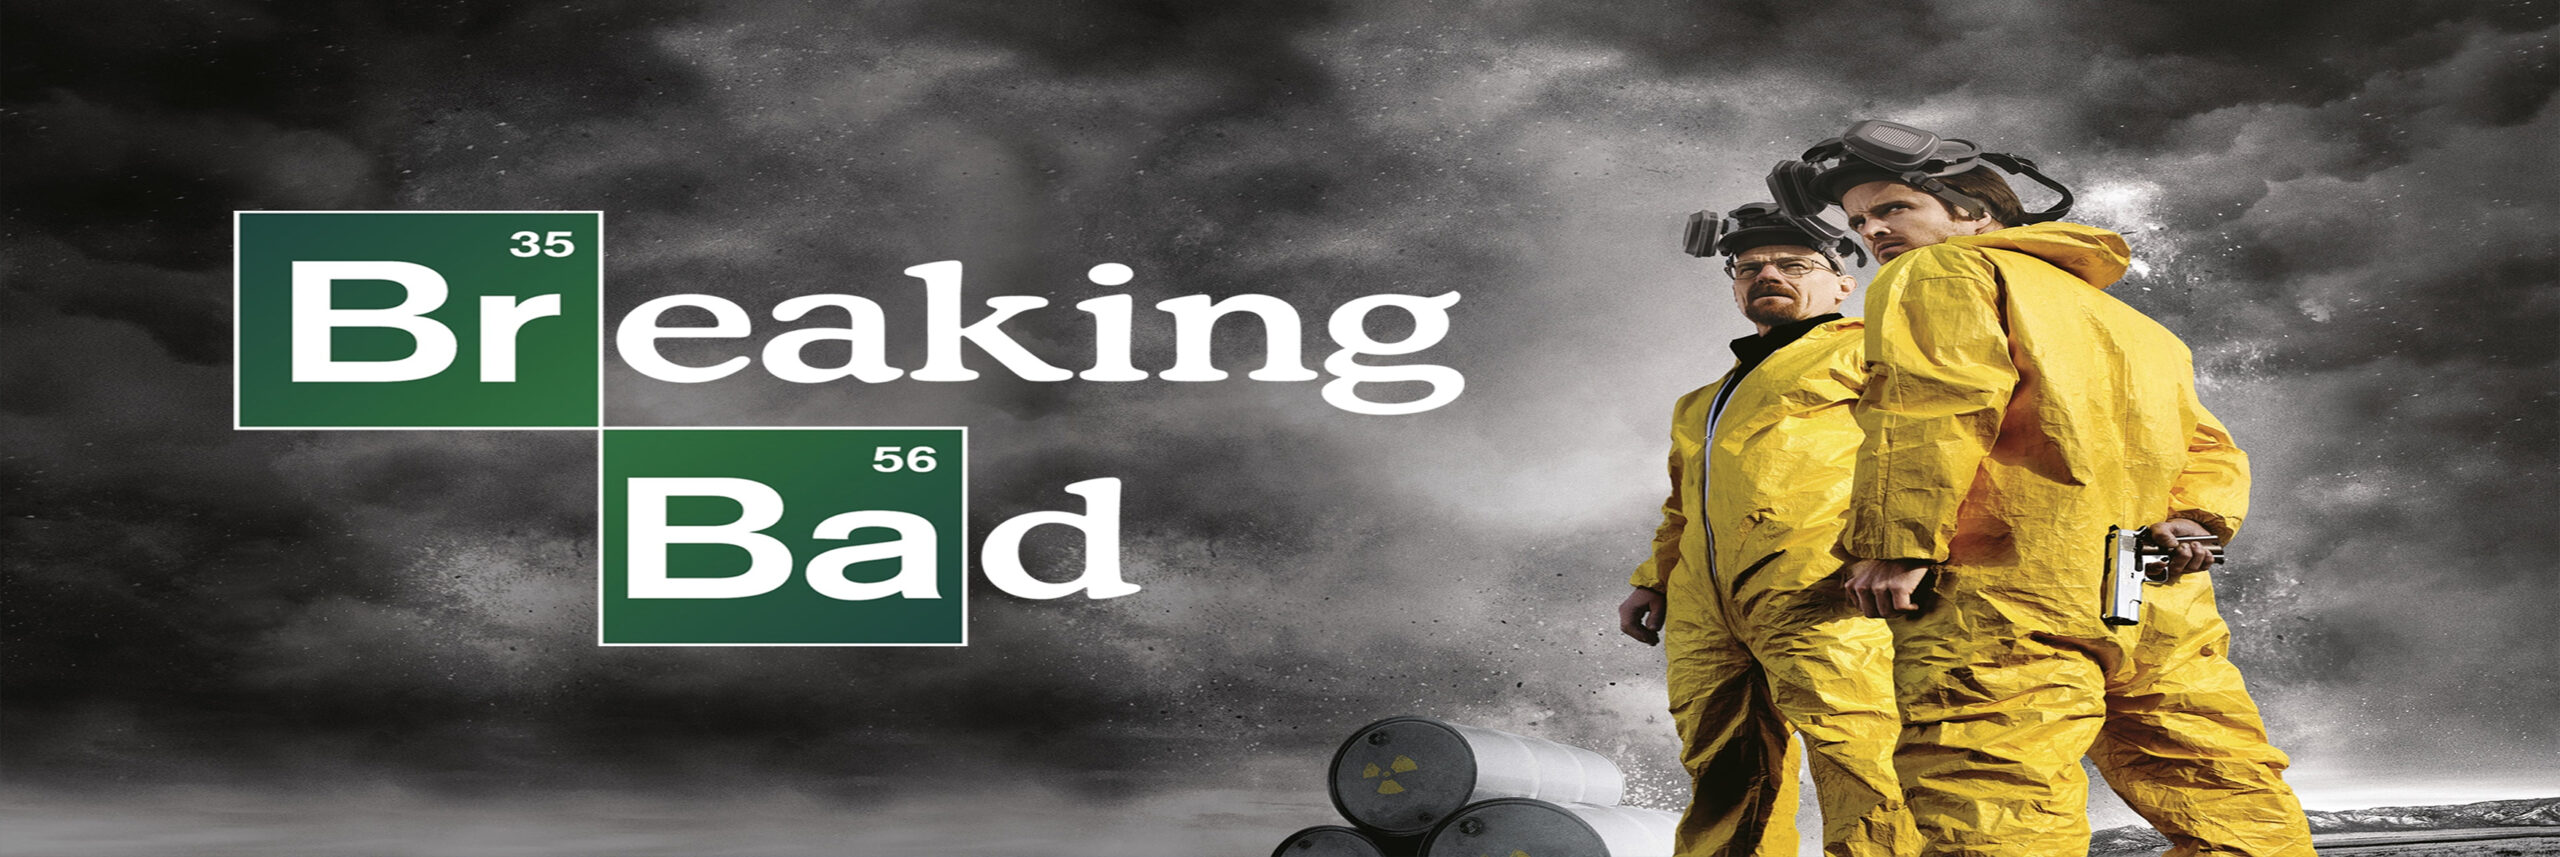 بریکینگ بد – Breaking Bad